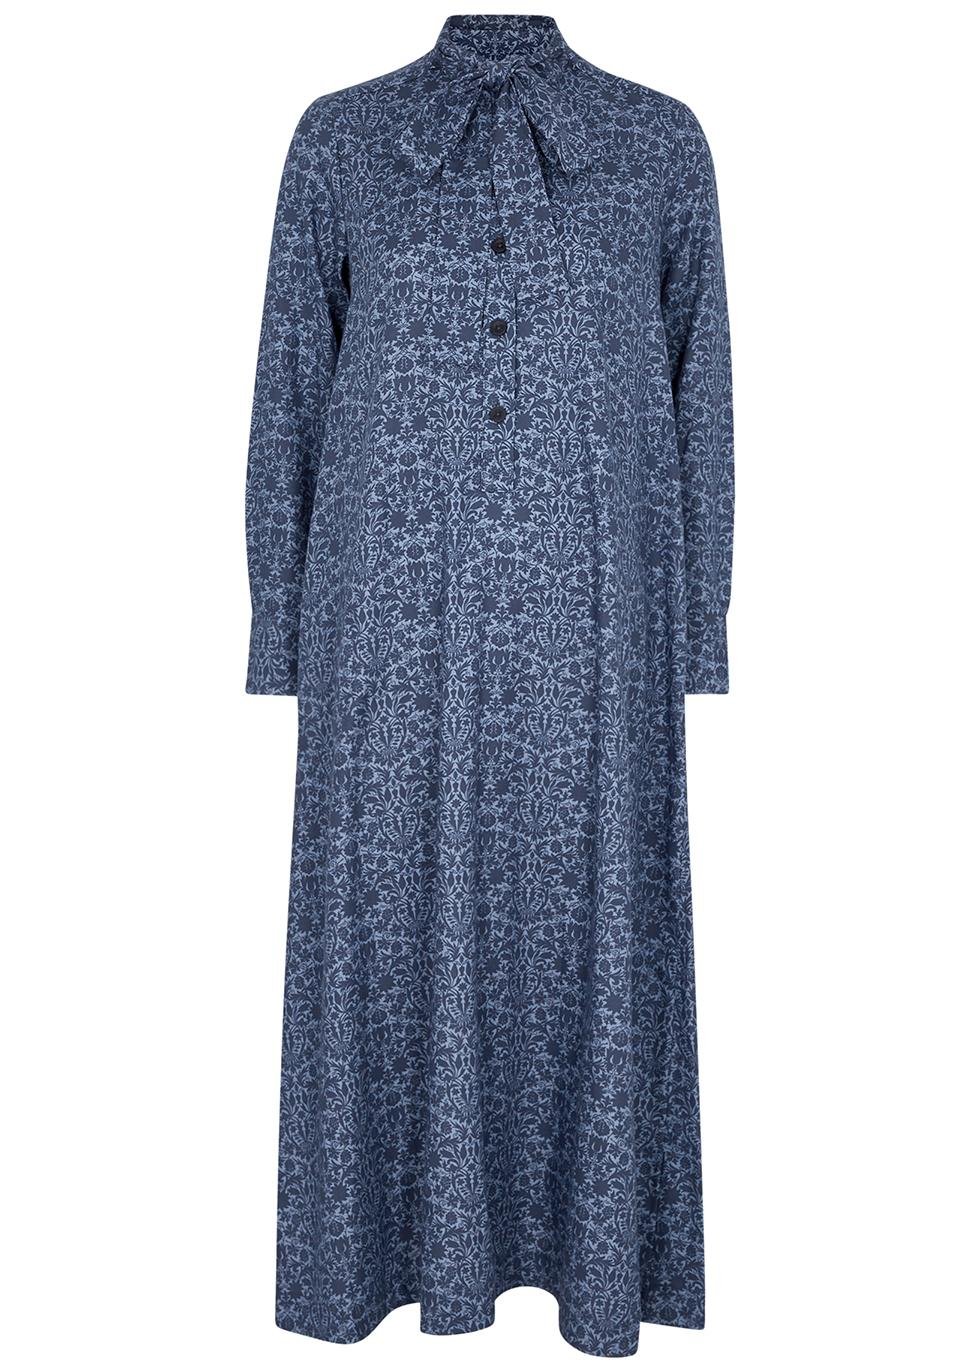 Alberte blue printed cotton-blend dress by APOF